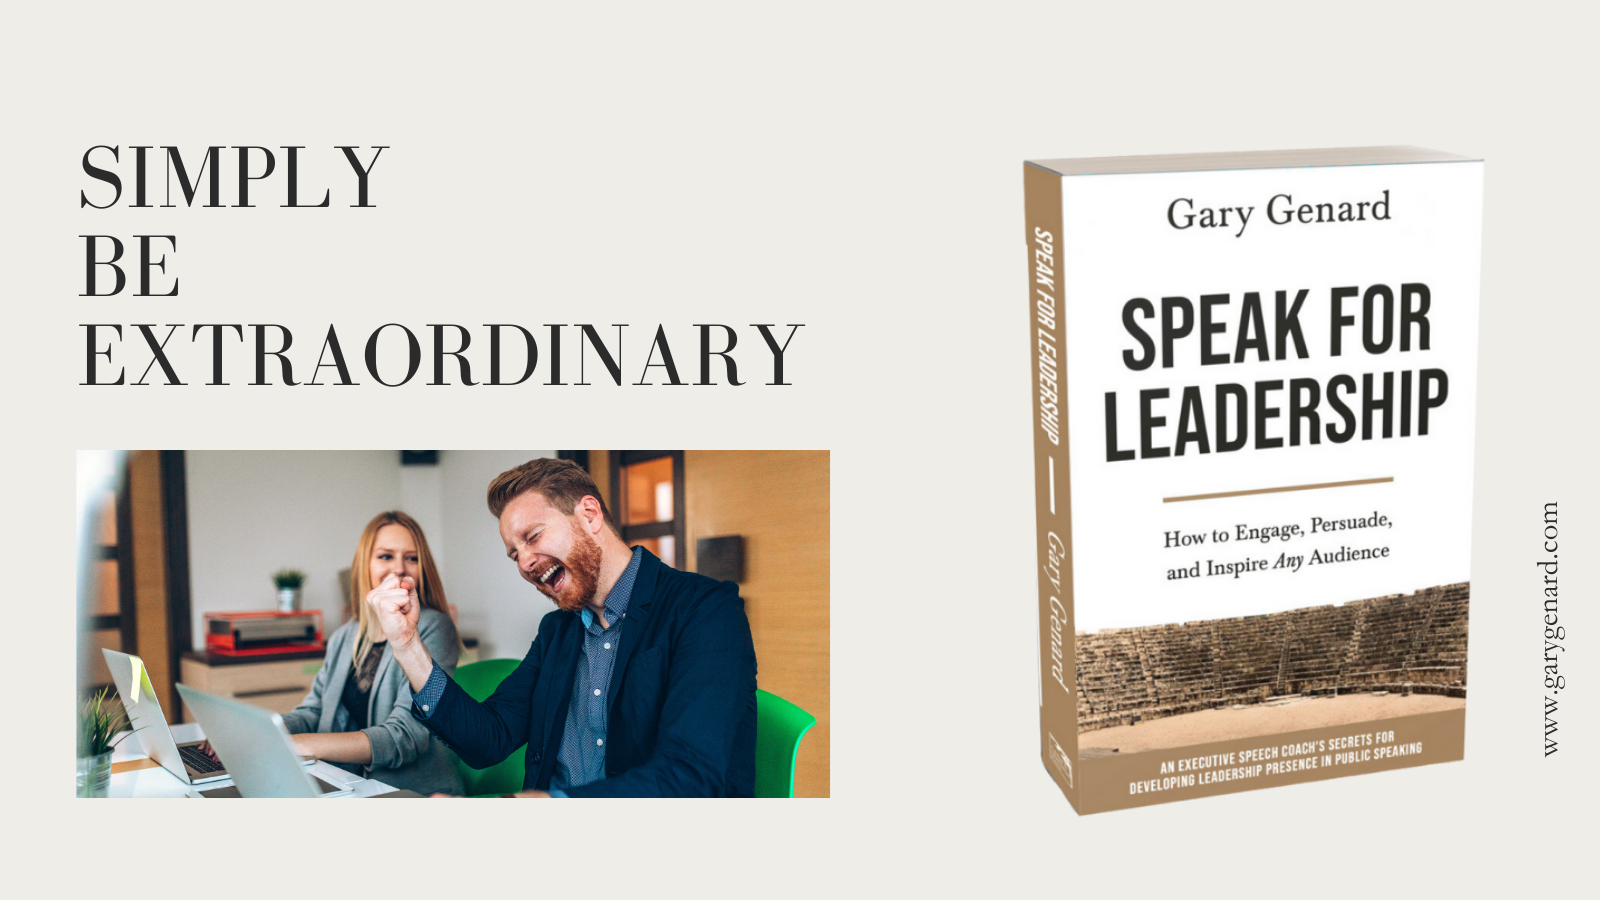 Dr. Gary Genard's book on extraordinary business presentations, Speak for Leadership.